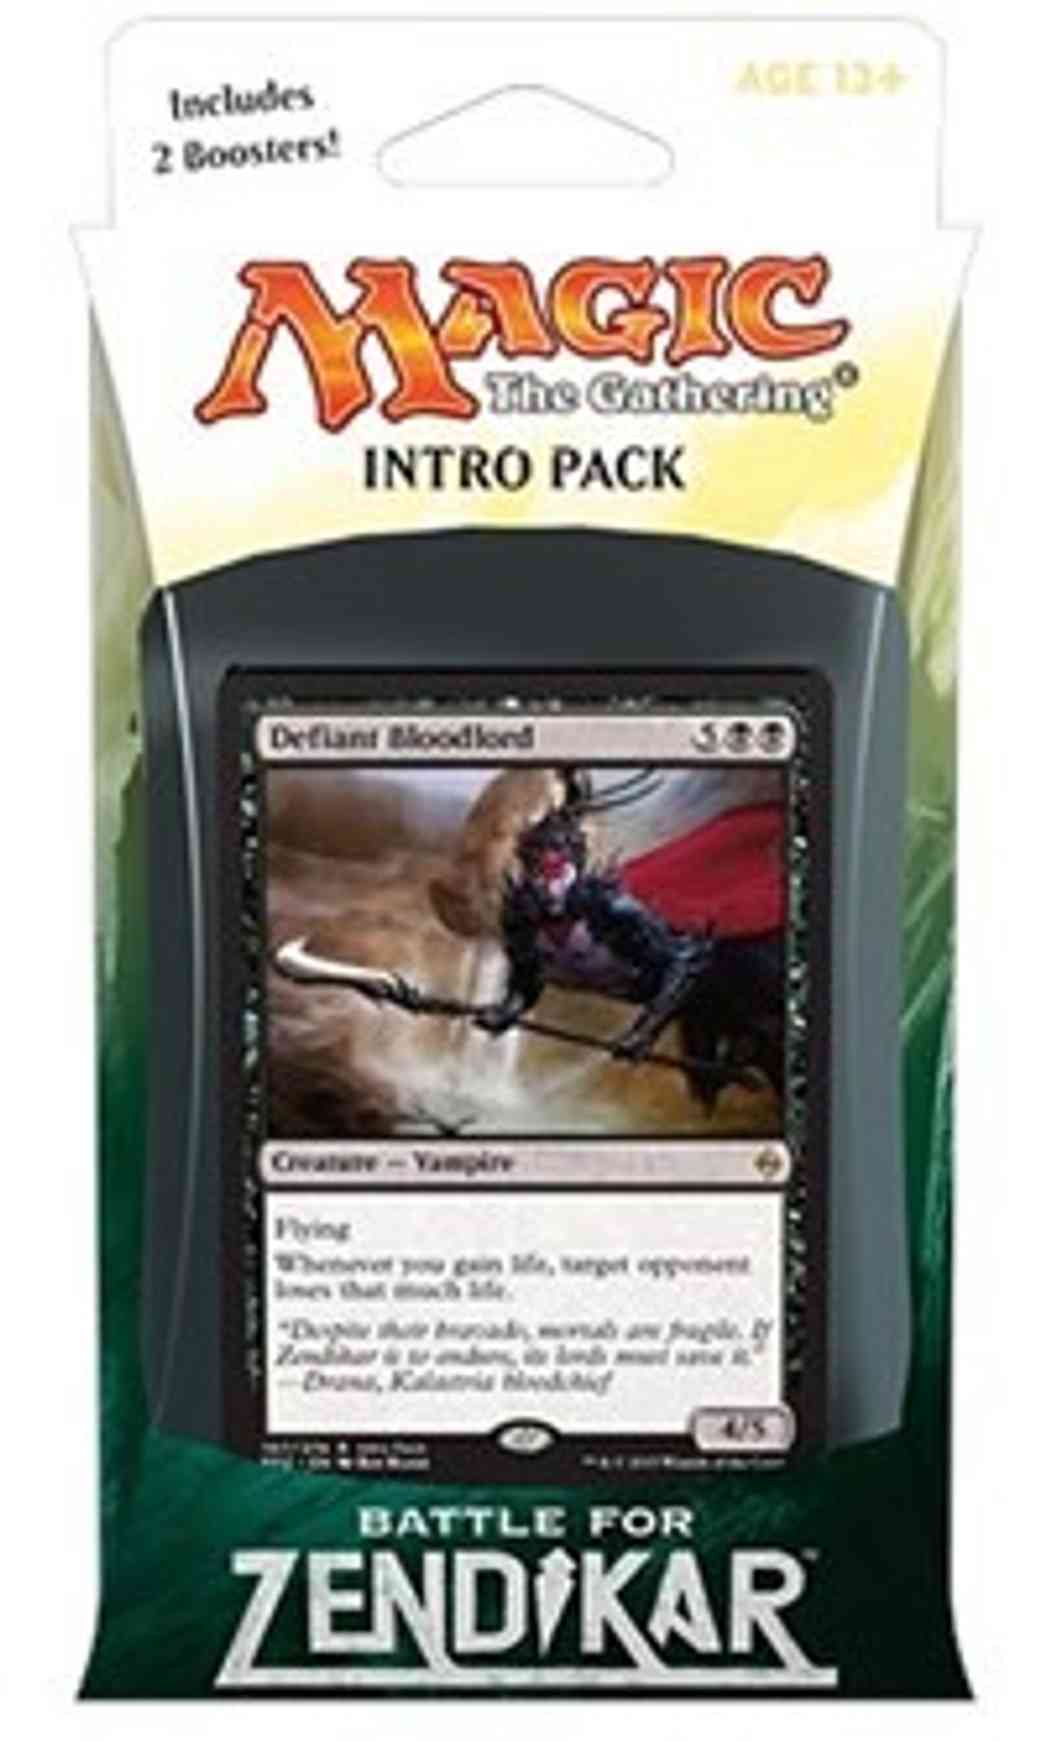 Battle for Zendikar Intro Pack - Black magic card front